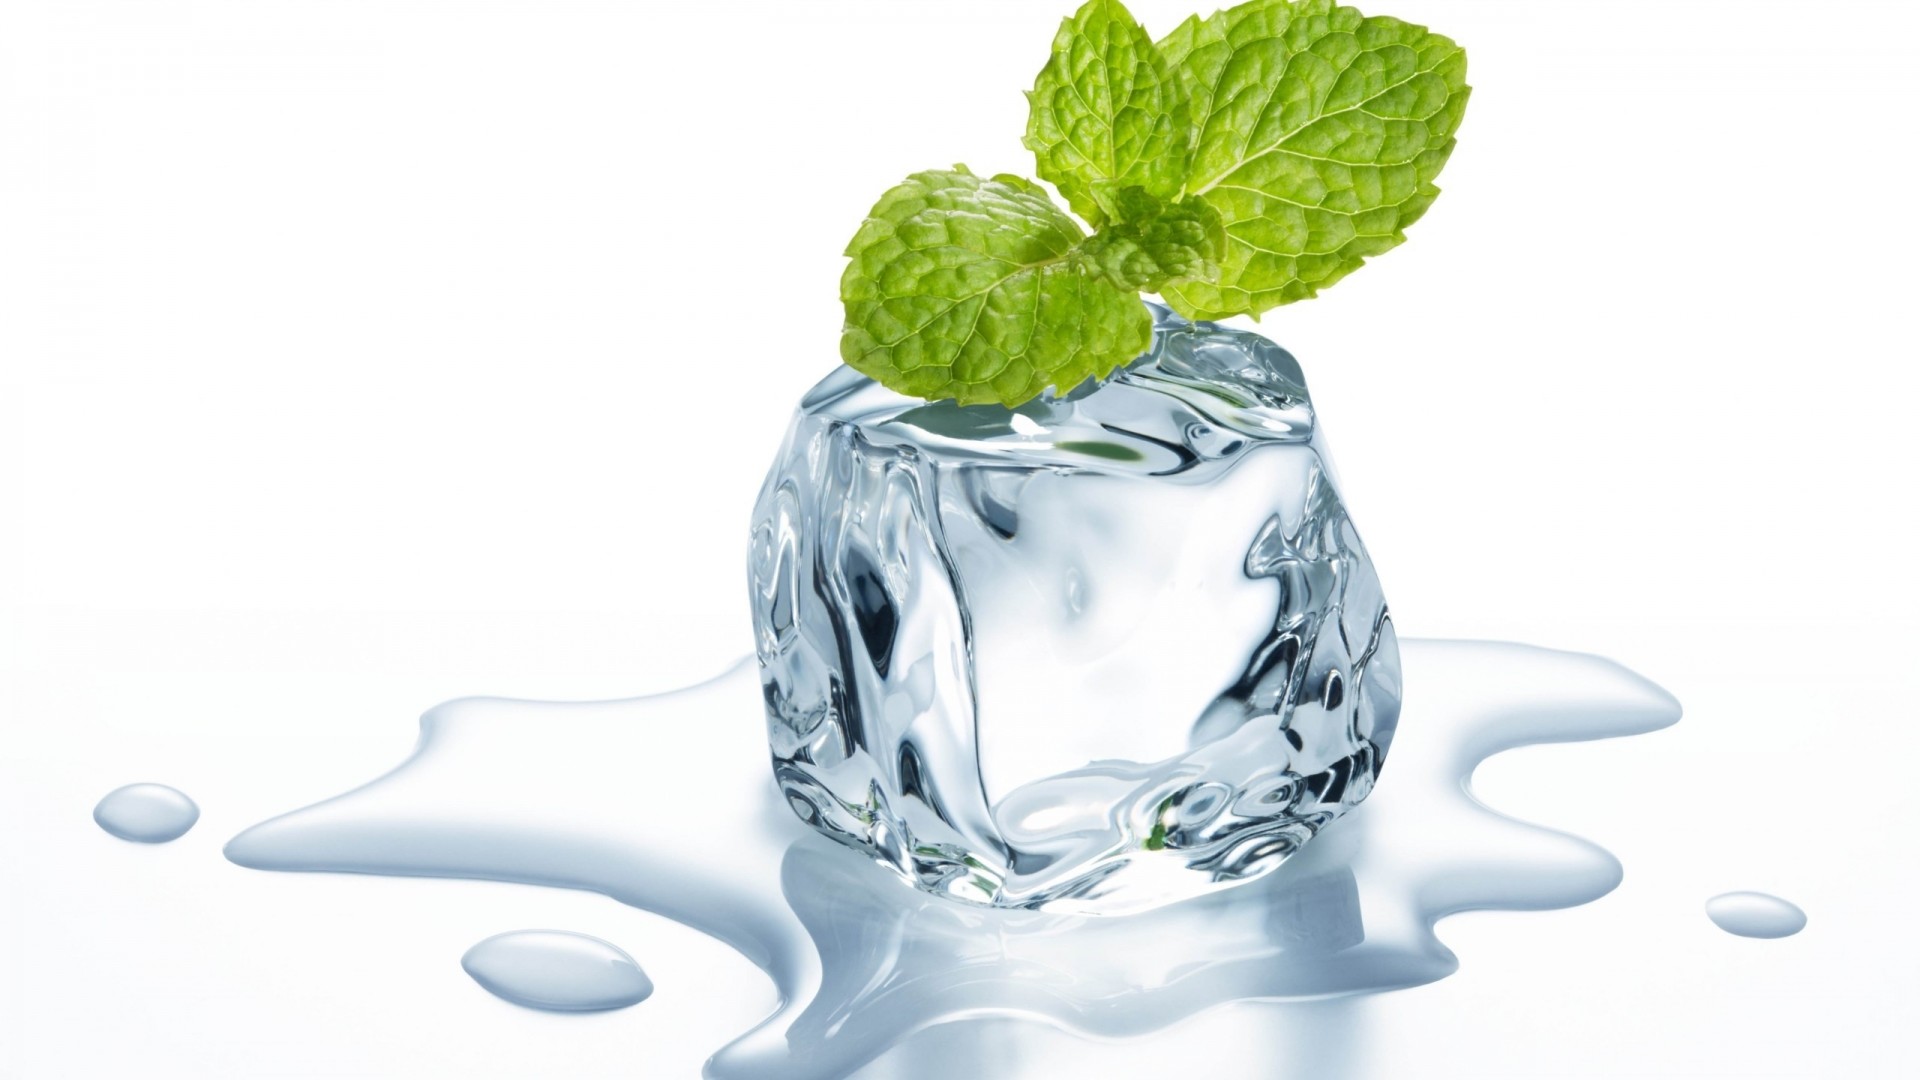 A mint on the ice cube - Fresh HD wallpaper - Wallpapersfans.com